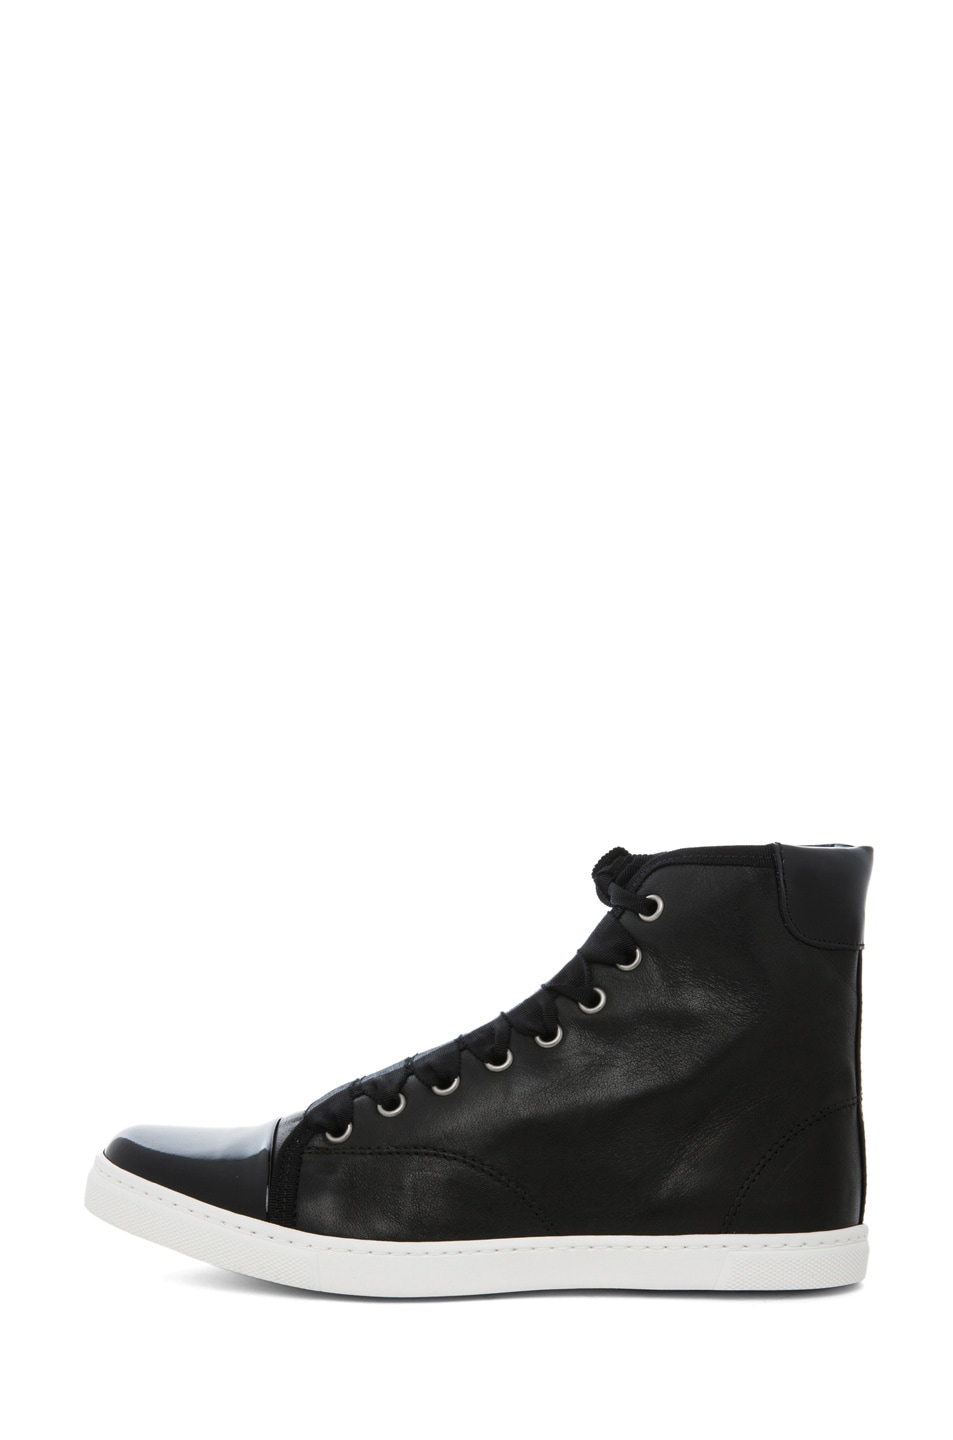 Lanvin Hi Top Patent Leather Sneaker in Black | FWRD